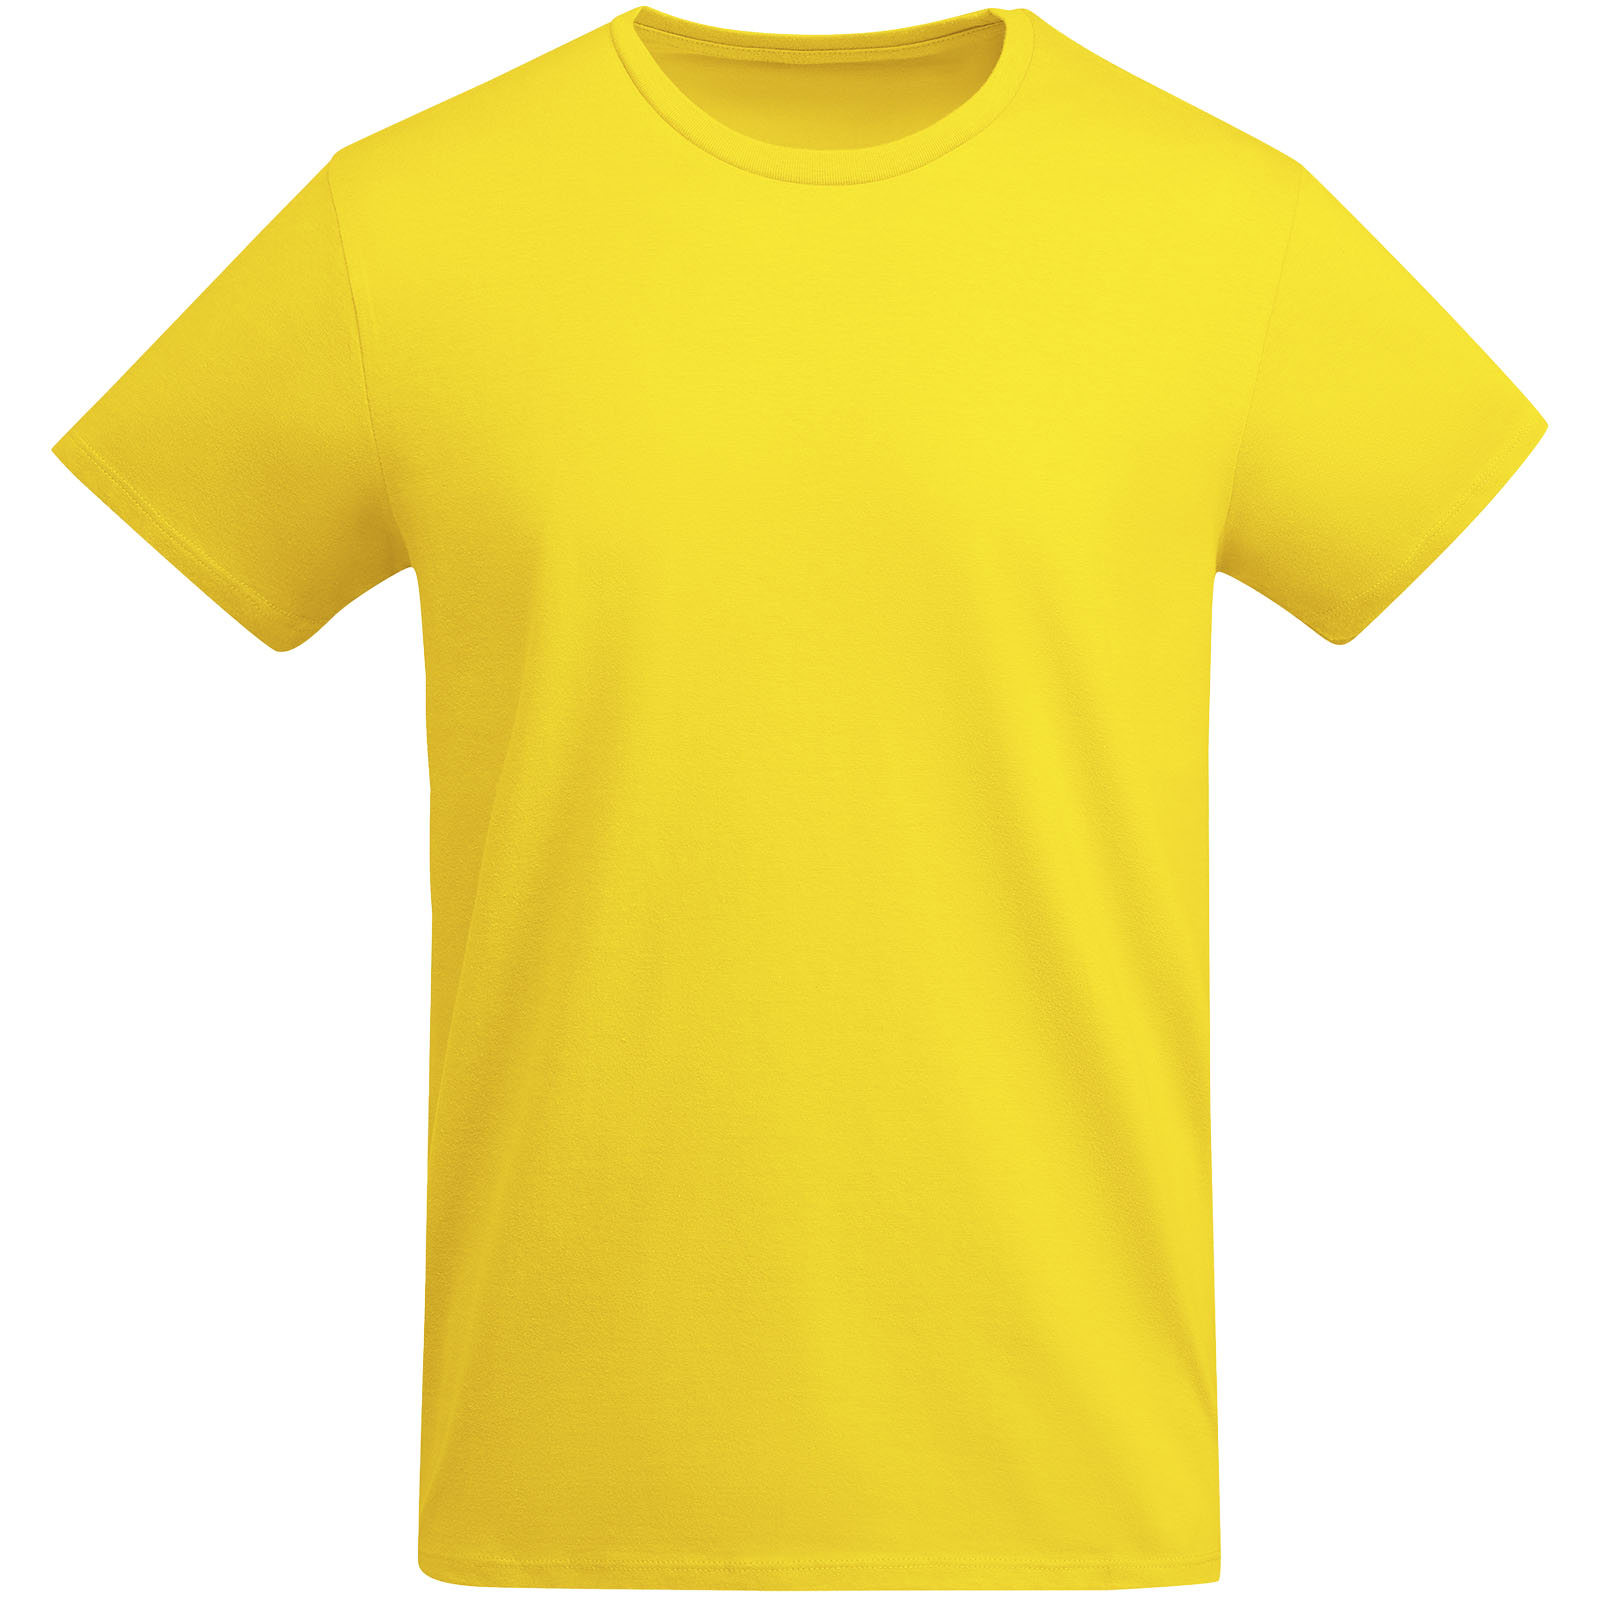 Breda short sleeve kids t-shirt - Maidstone